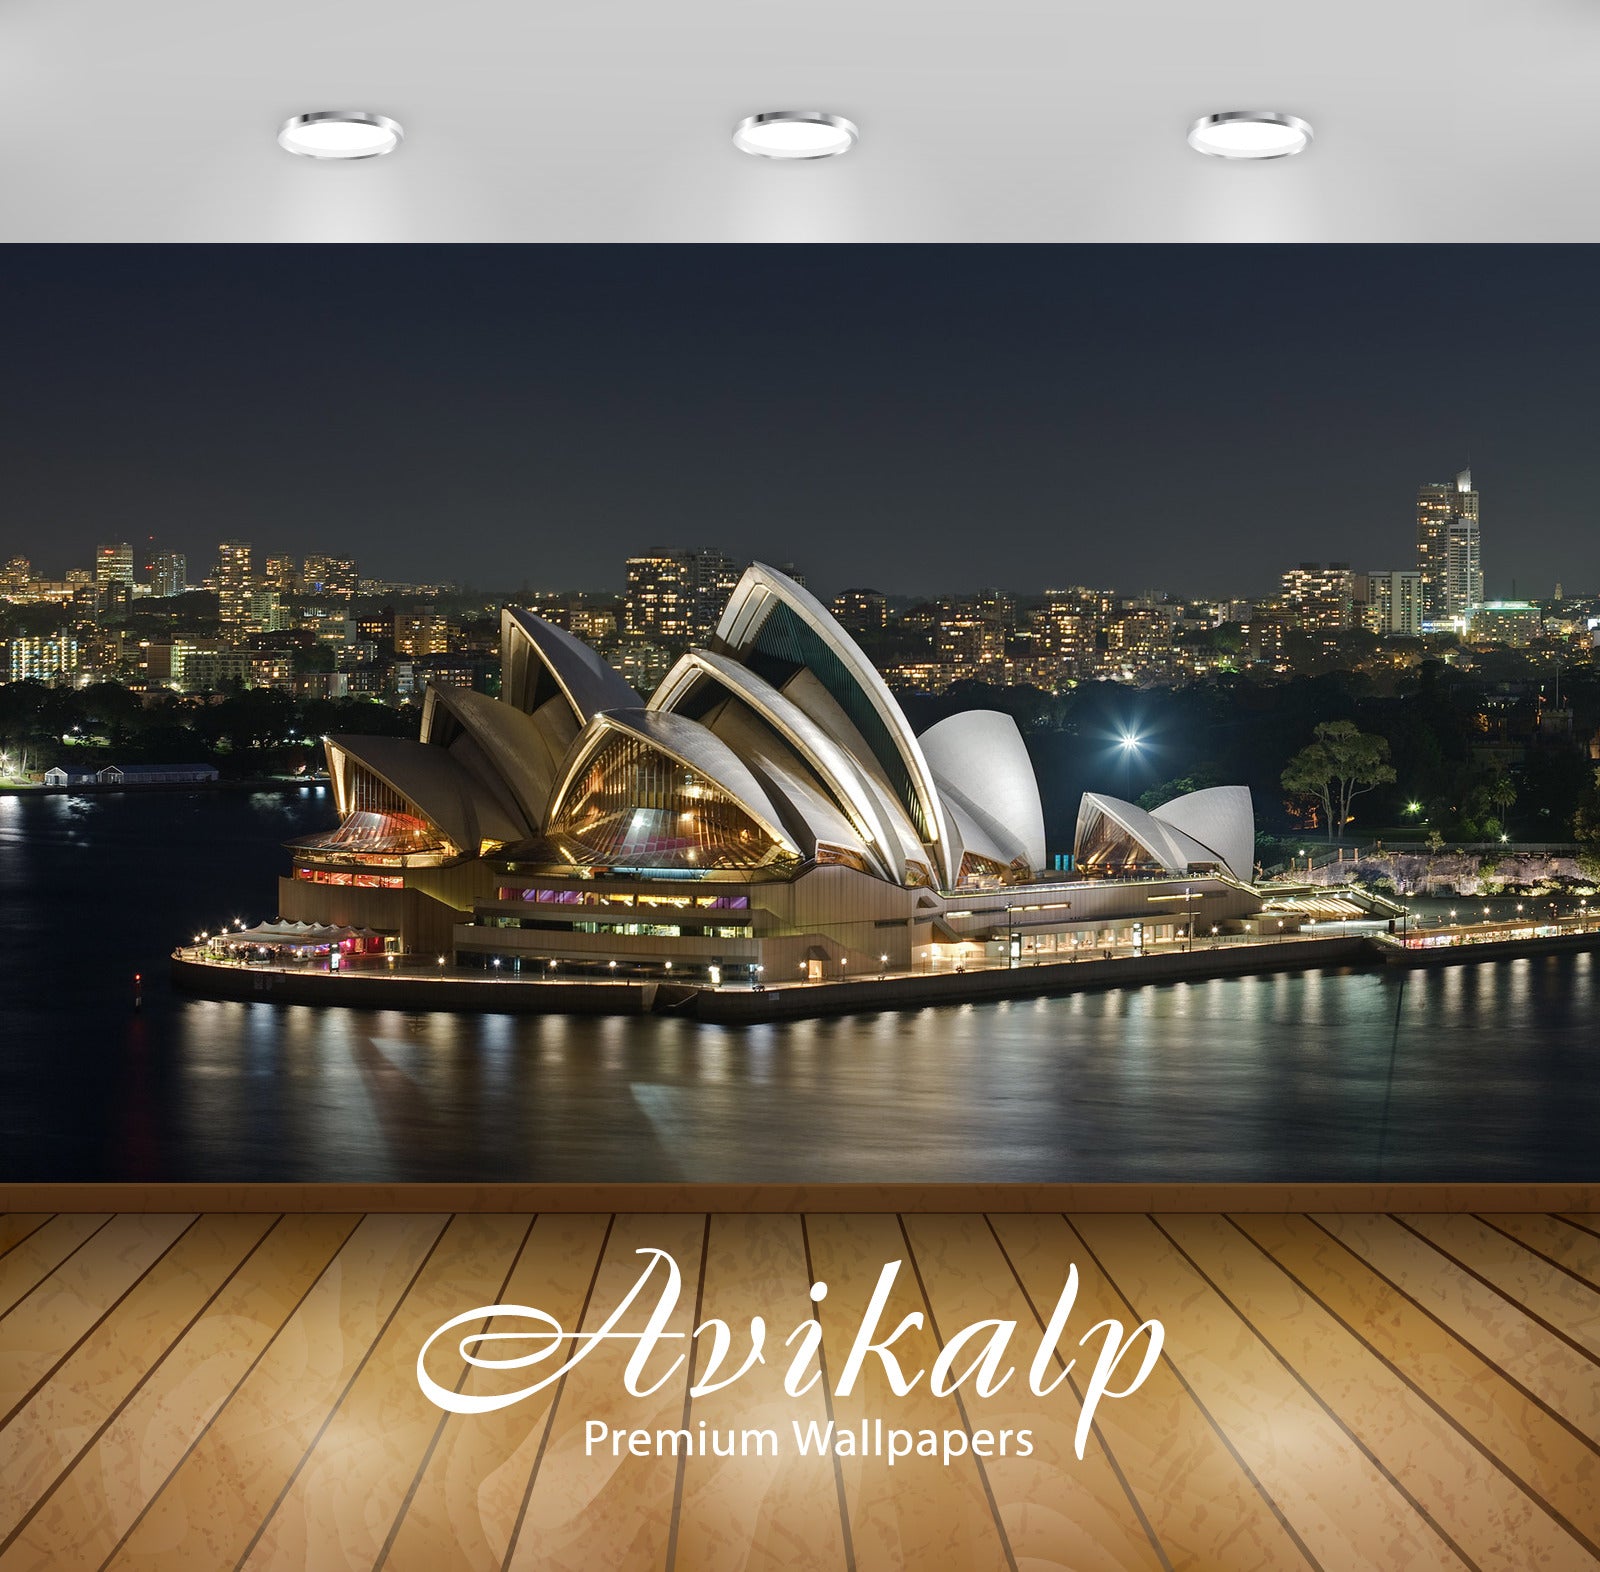 Avikalp Exclusive Awi1688 Beautiful Australia City View Full HD Wallpapers for Living room, Hall, Ki